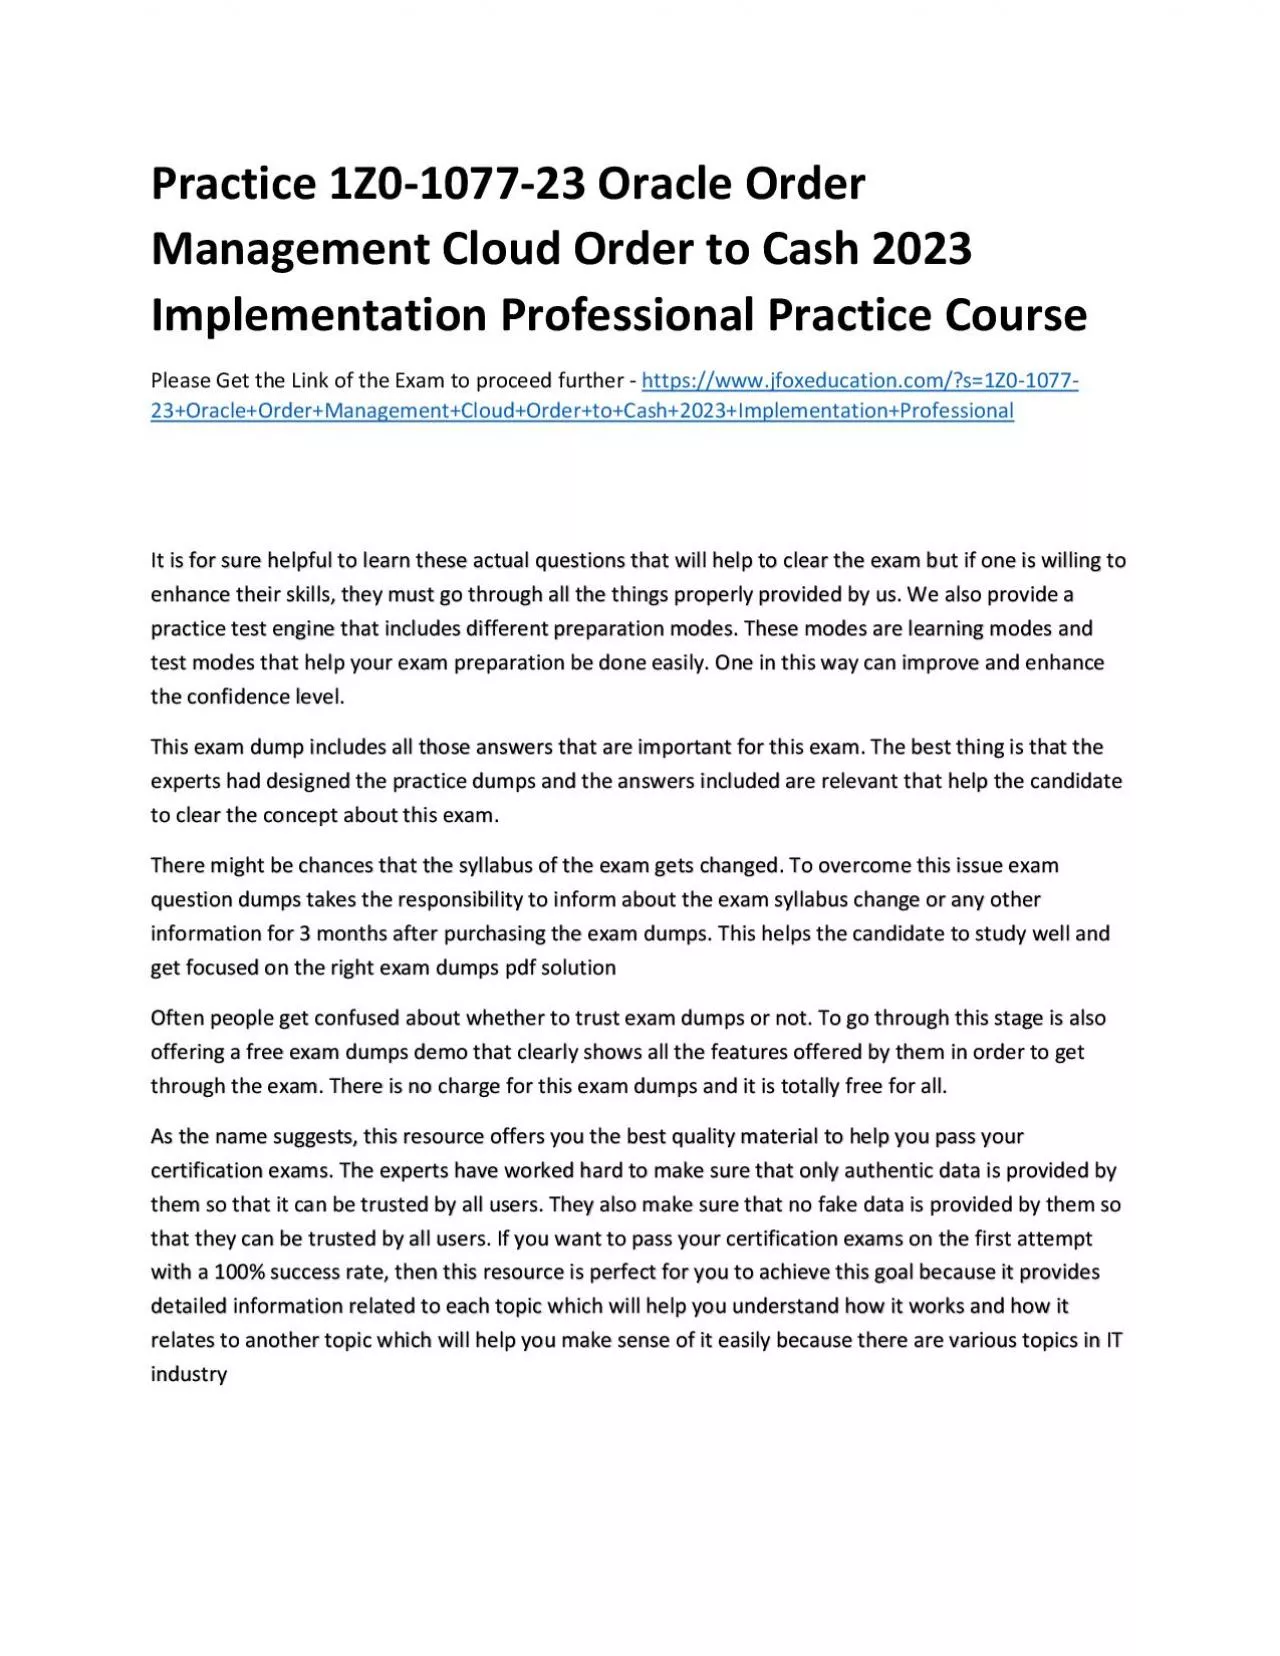 Practice 1Z0-1077-23 Oracle Order Management Cloud Order to Cash 2023 Implementation Professional